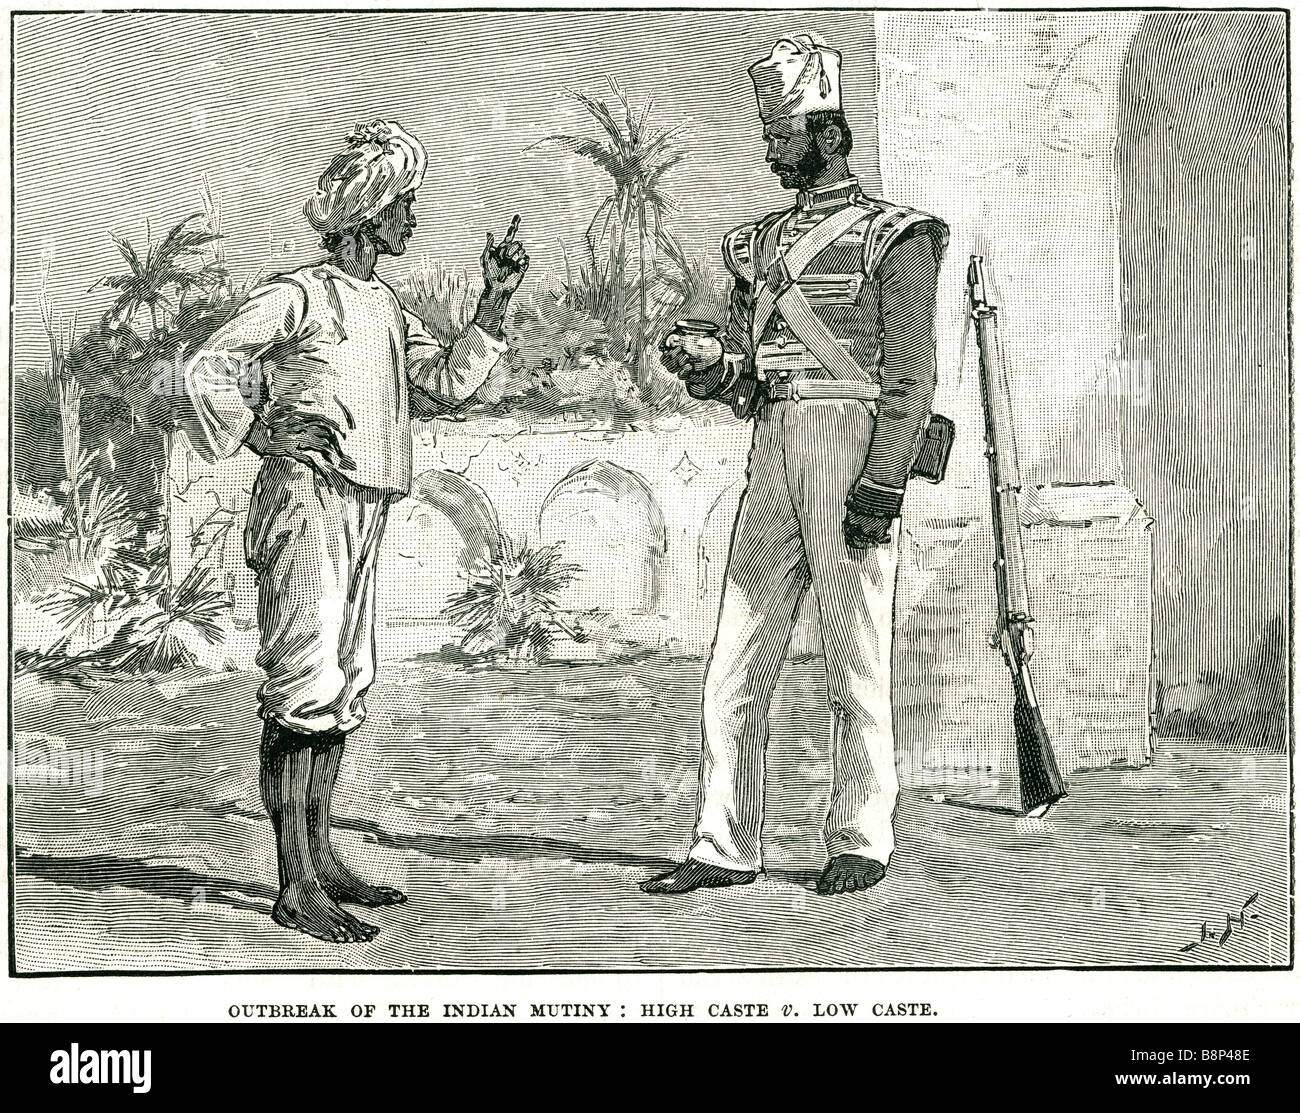 outbreak indian mutiny high castle v low castle 1857 Rebellion British East India Company Meerut civilian Stock Photo